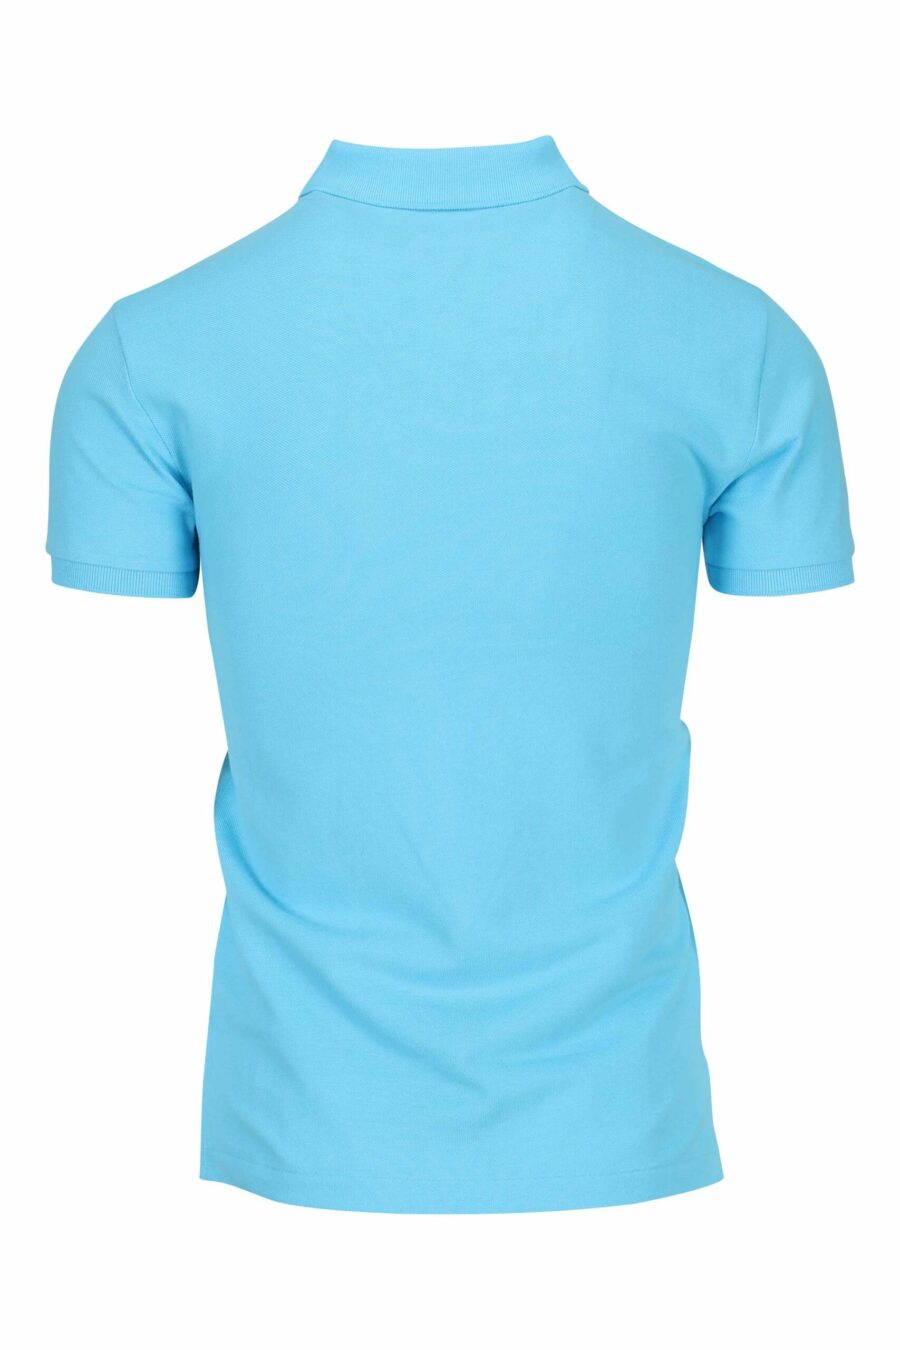 Mint blue polo shirt with mini-logo "polo" - 3616411864512 1 scaled